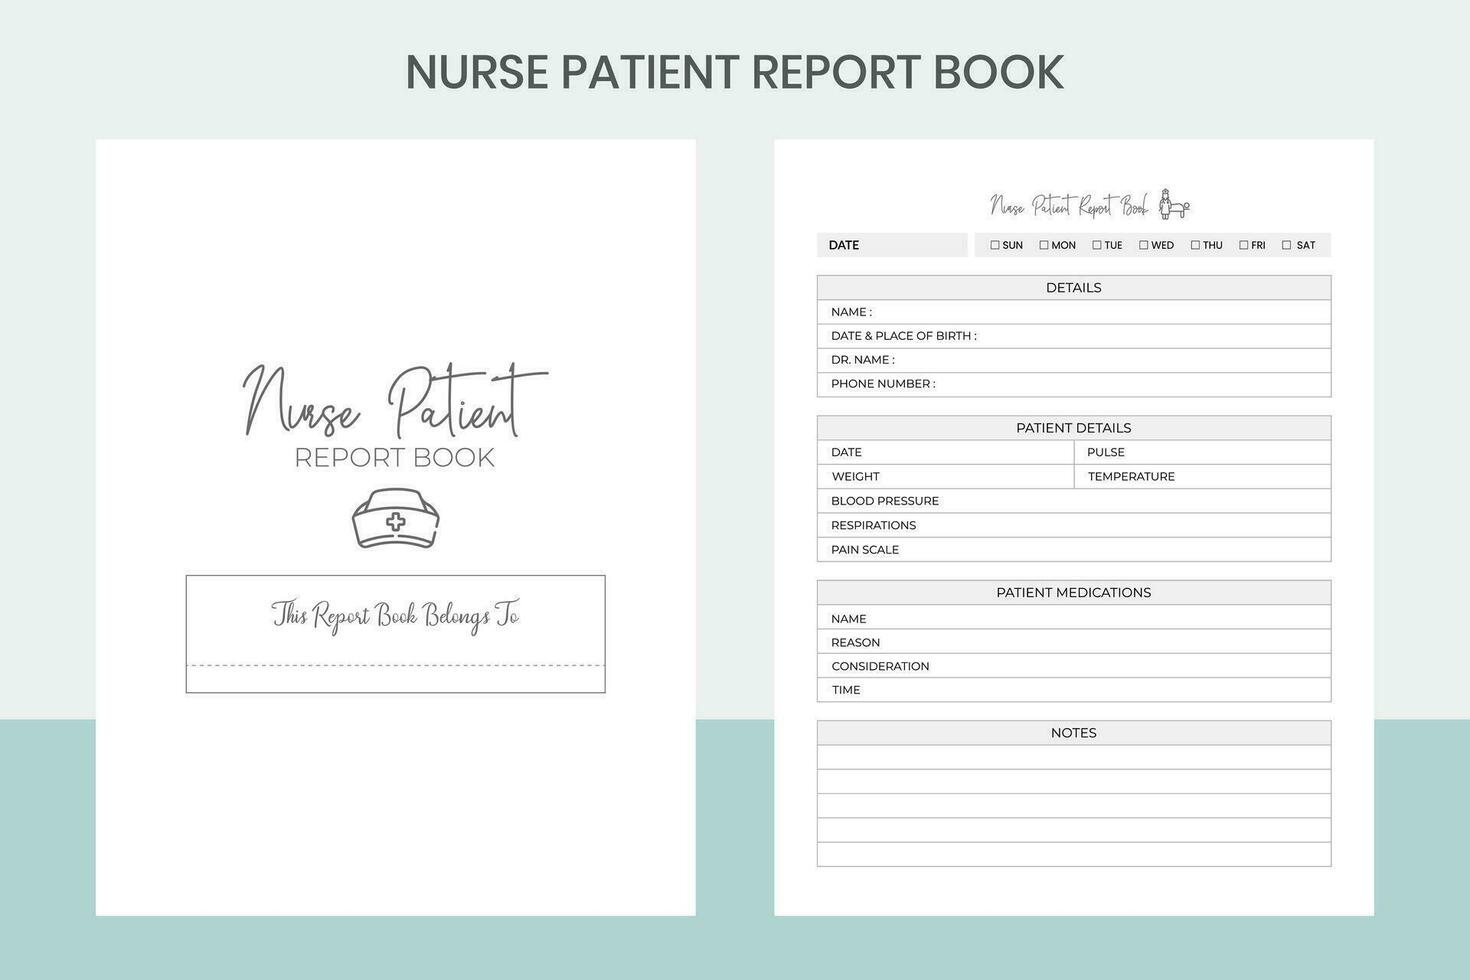 Nurse Patient Report Book Pro Template vector